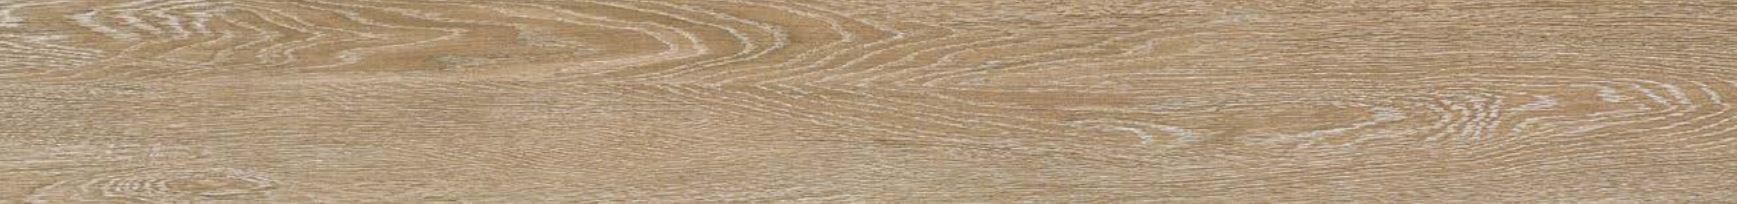 Lea Ceramiche Slimtech Wood Stock Nut 33x300